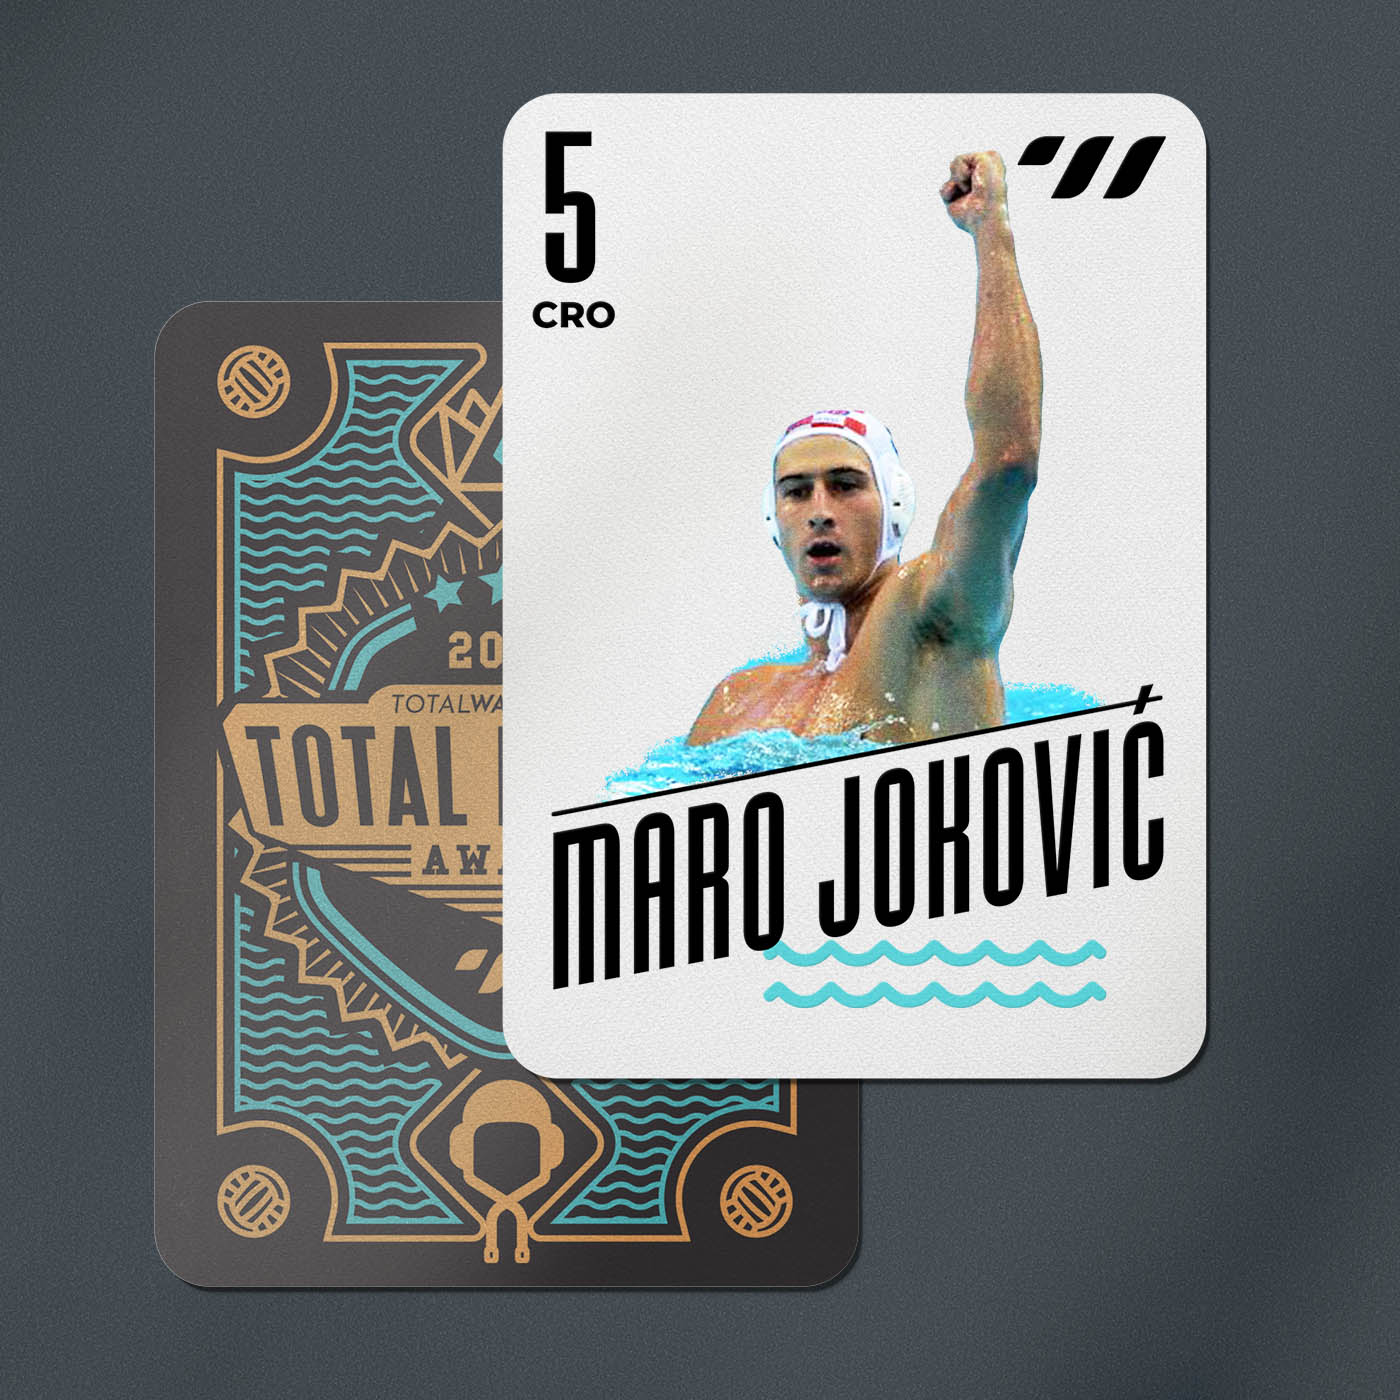 RIGHT SIDE - Maro Jokovic (CRO)